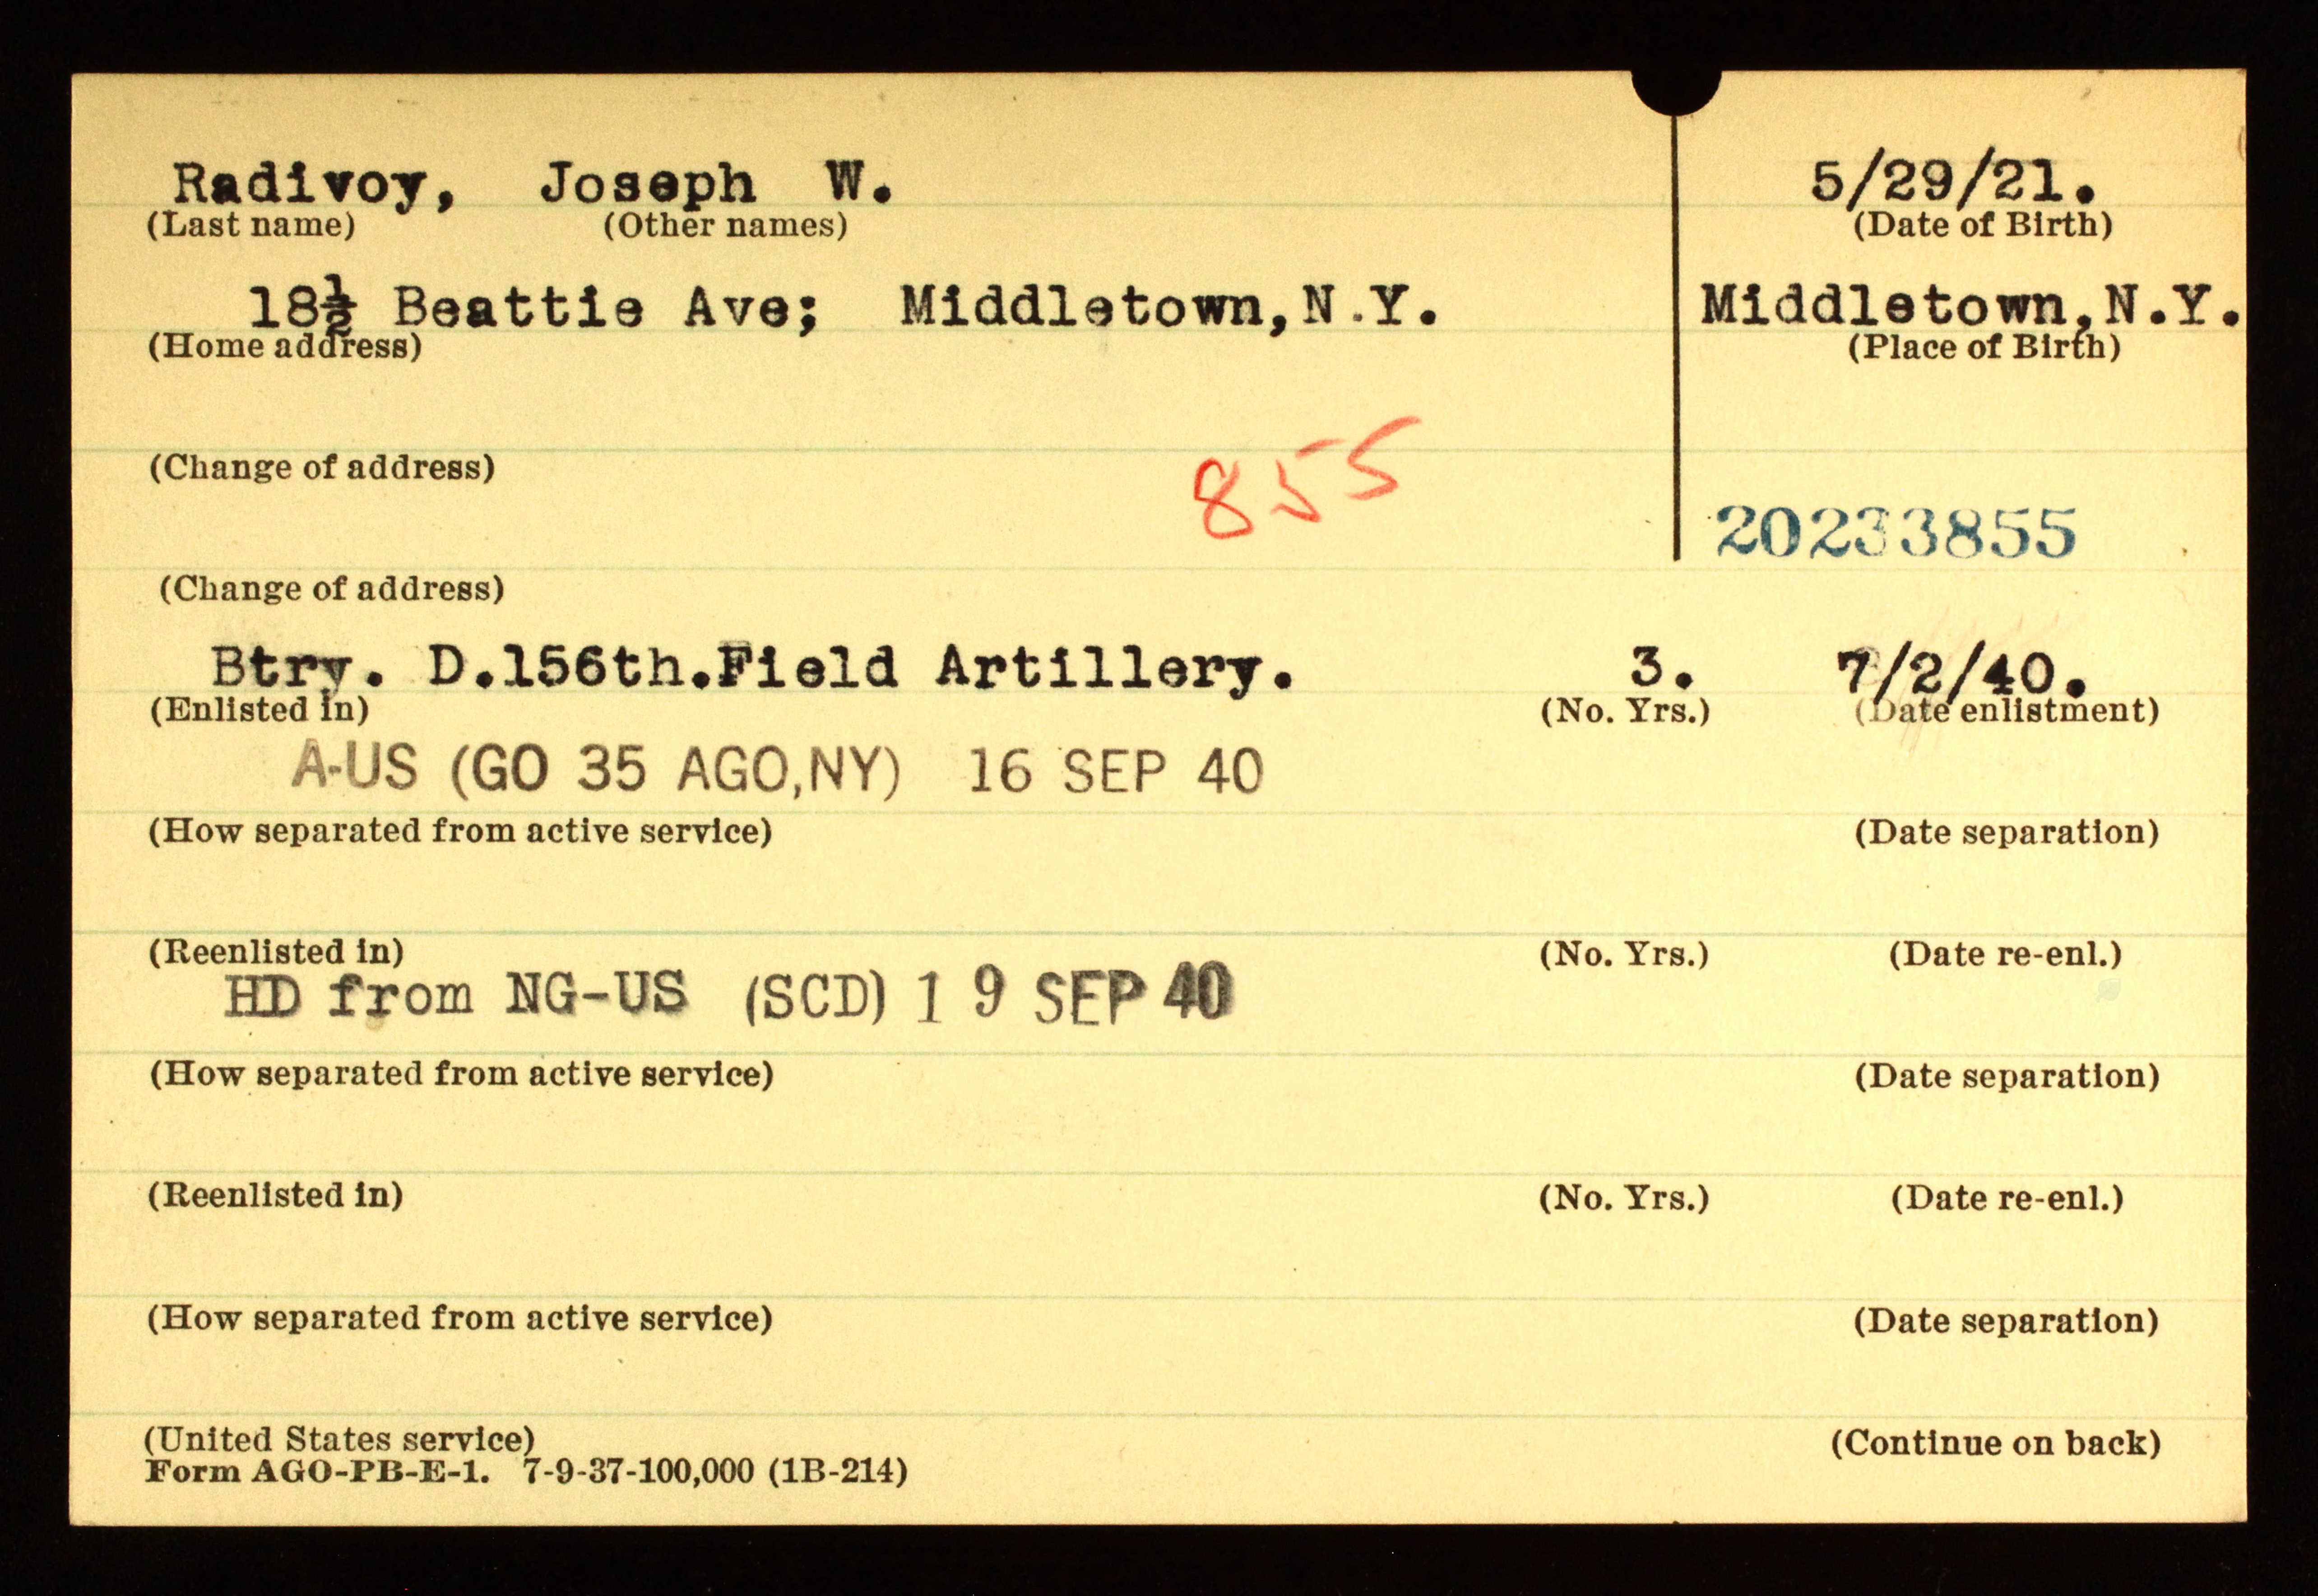 National Guard Service Card for Joseph Radivoy